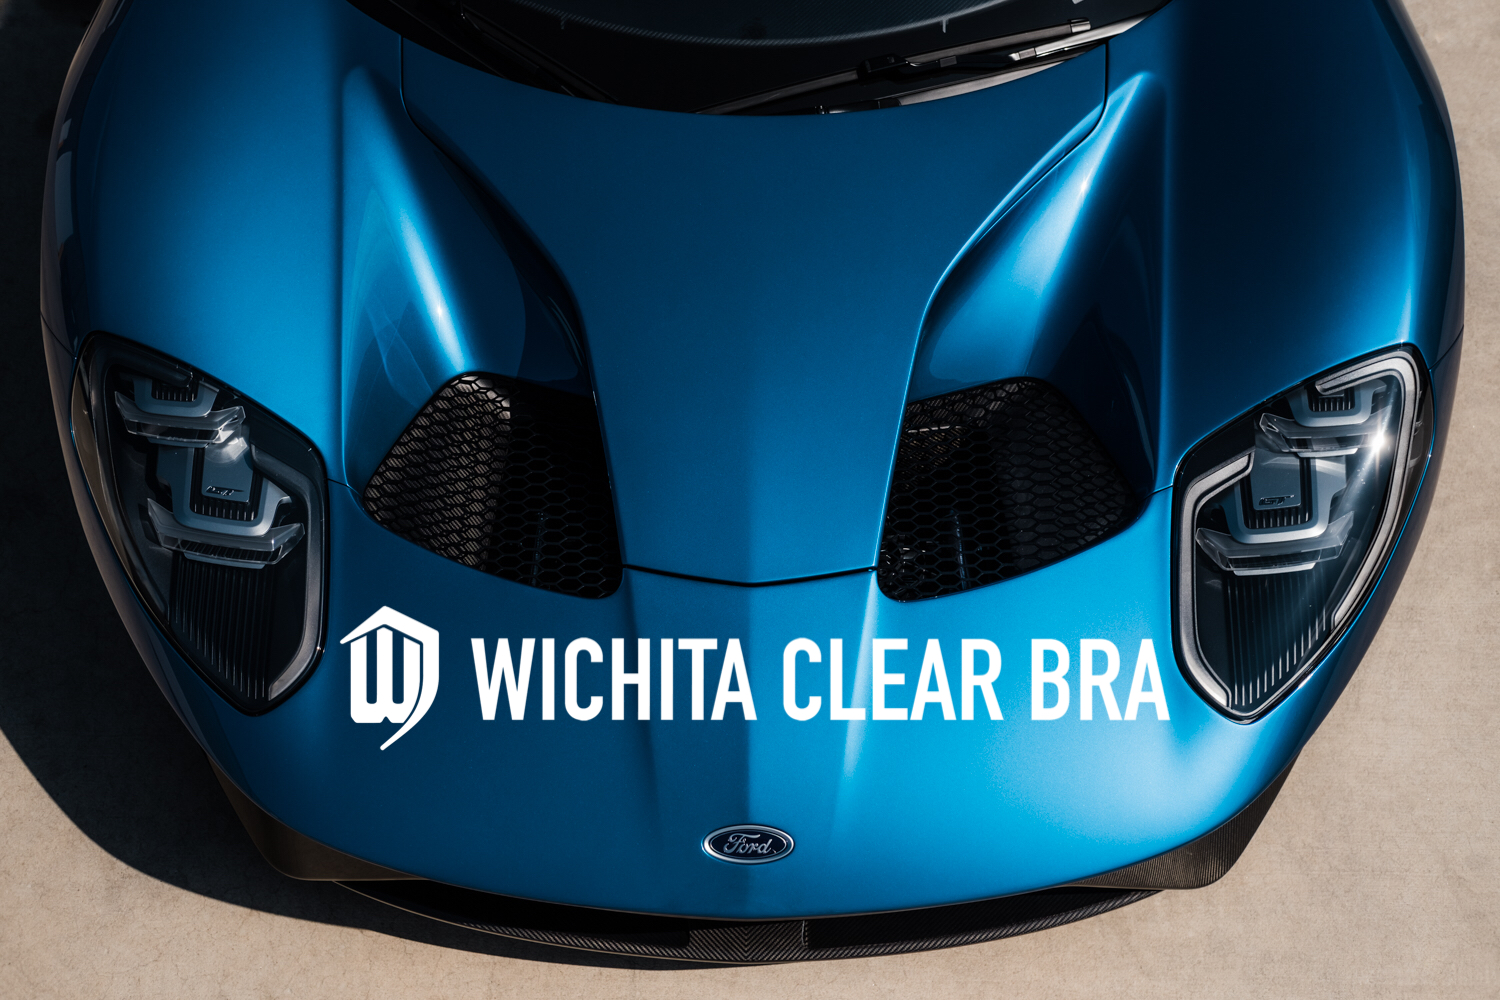 Paint Protection Film / Clear Bra Details — Wichita Clear Bra